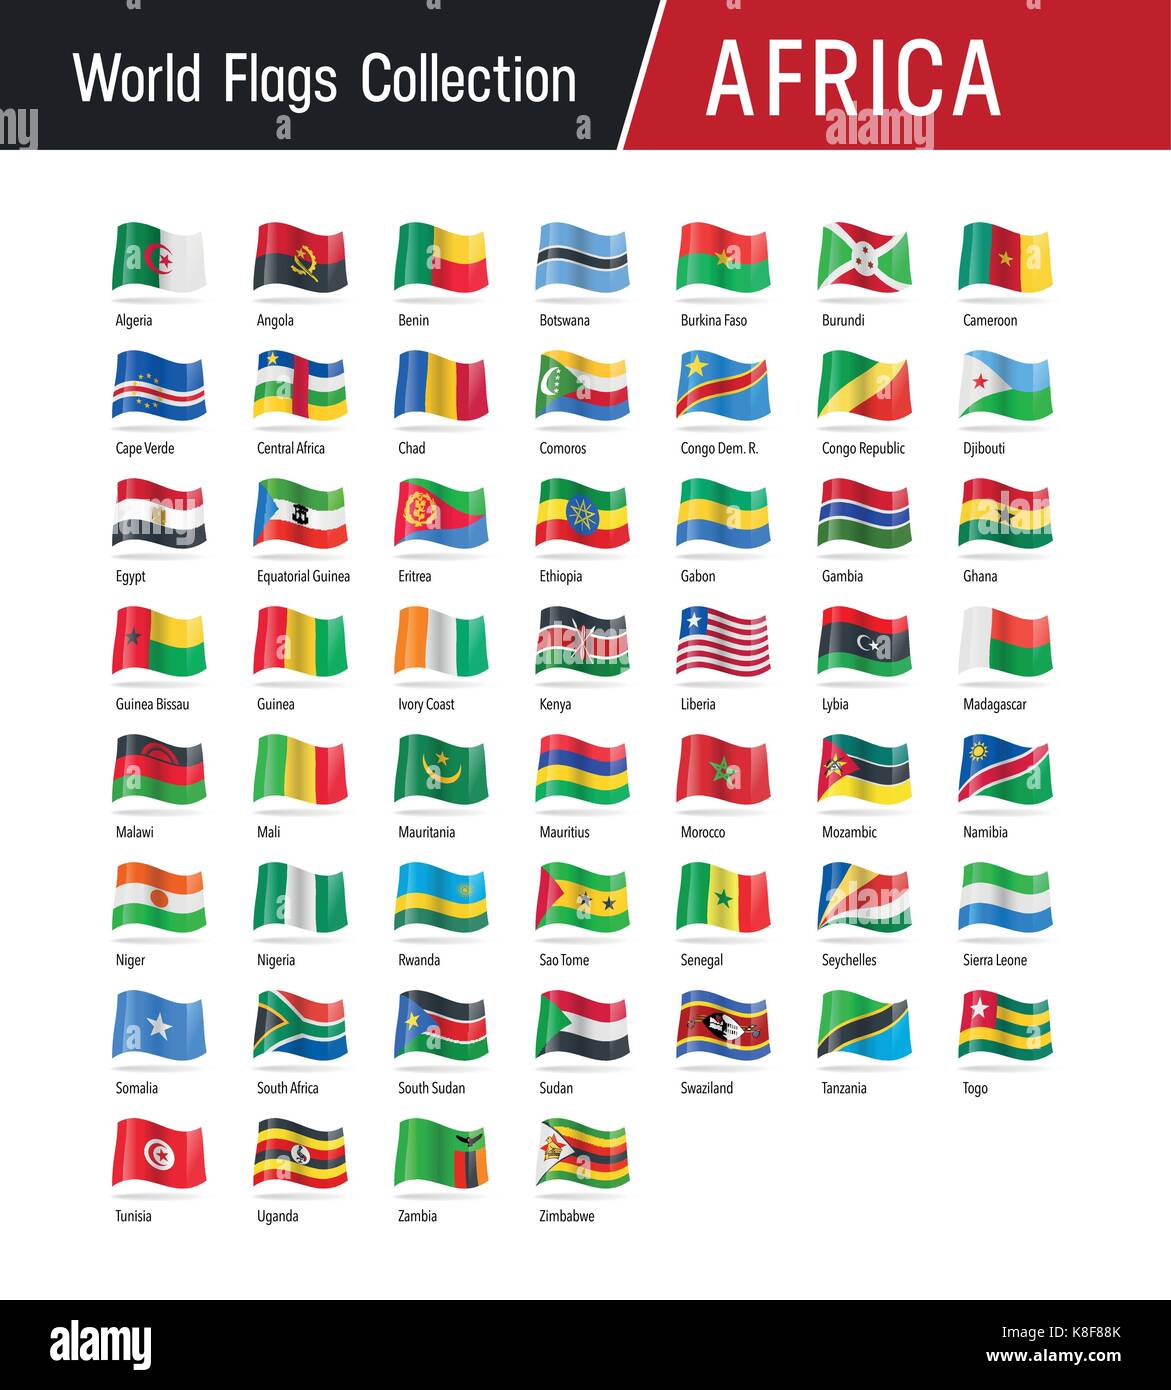 Flaggen Afrika, winken im Wind - Vektor Welt Fahnen Sammlung Stock Vektor